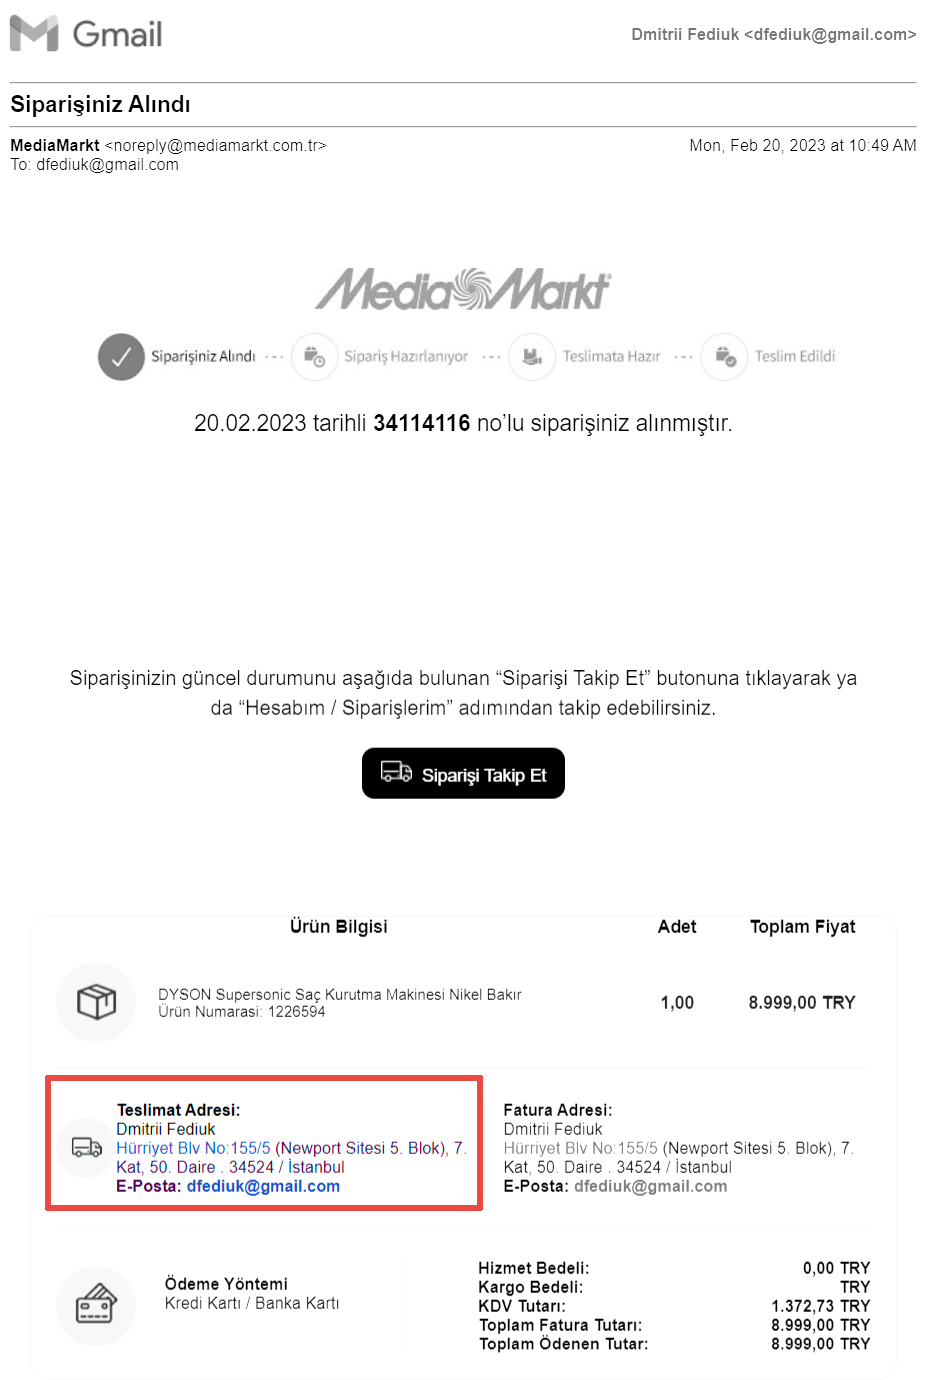 mediamarkt-order-email-TR-address-highlighted